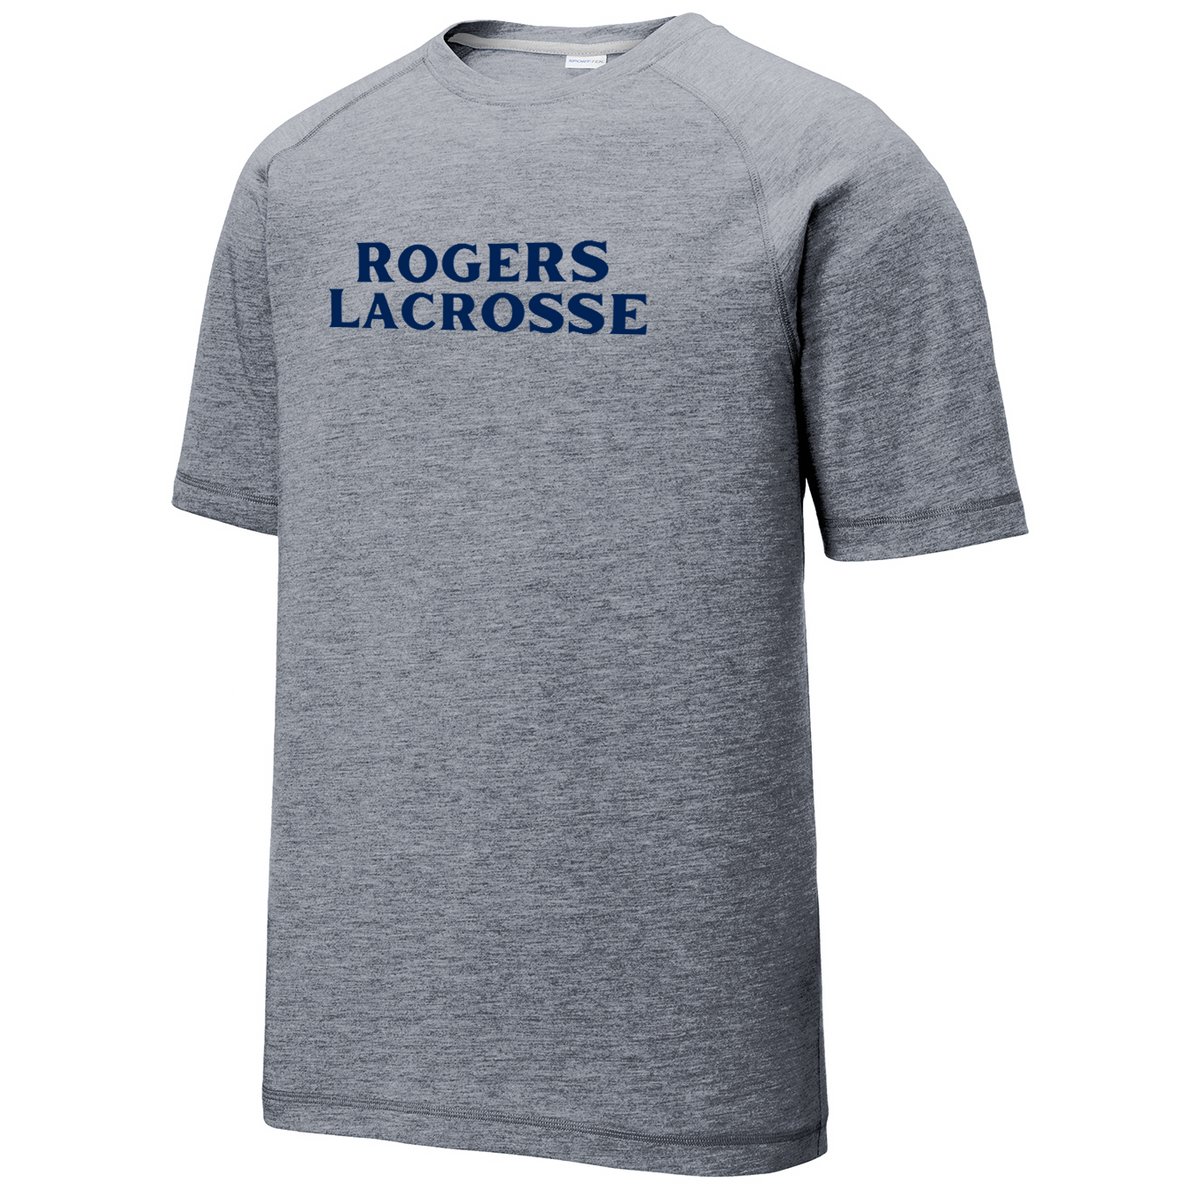 Rogers Lacrosse Raglan CottonTouch Tee